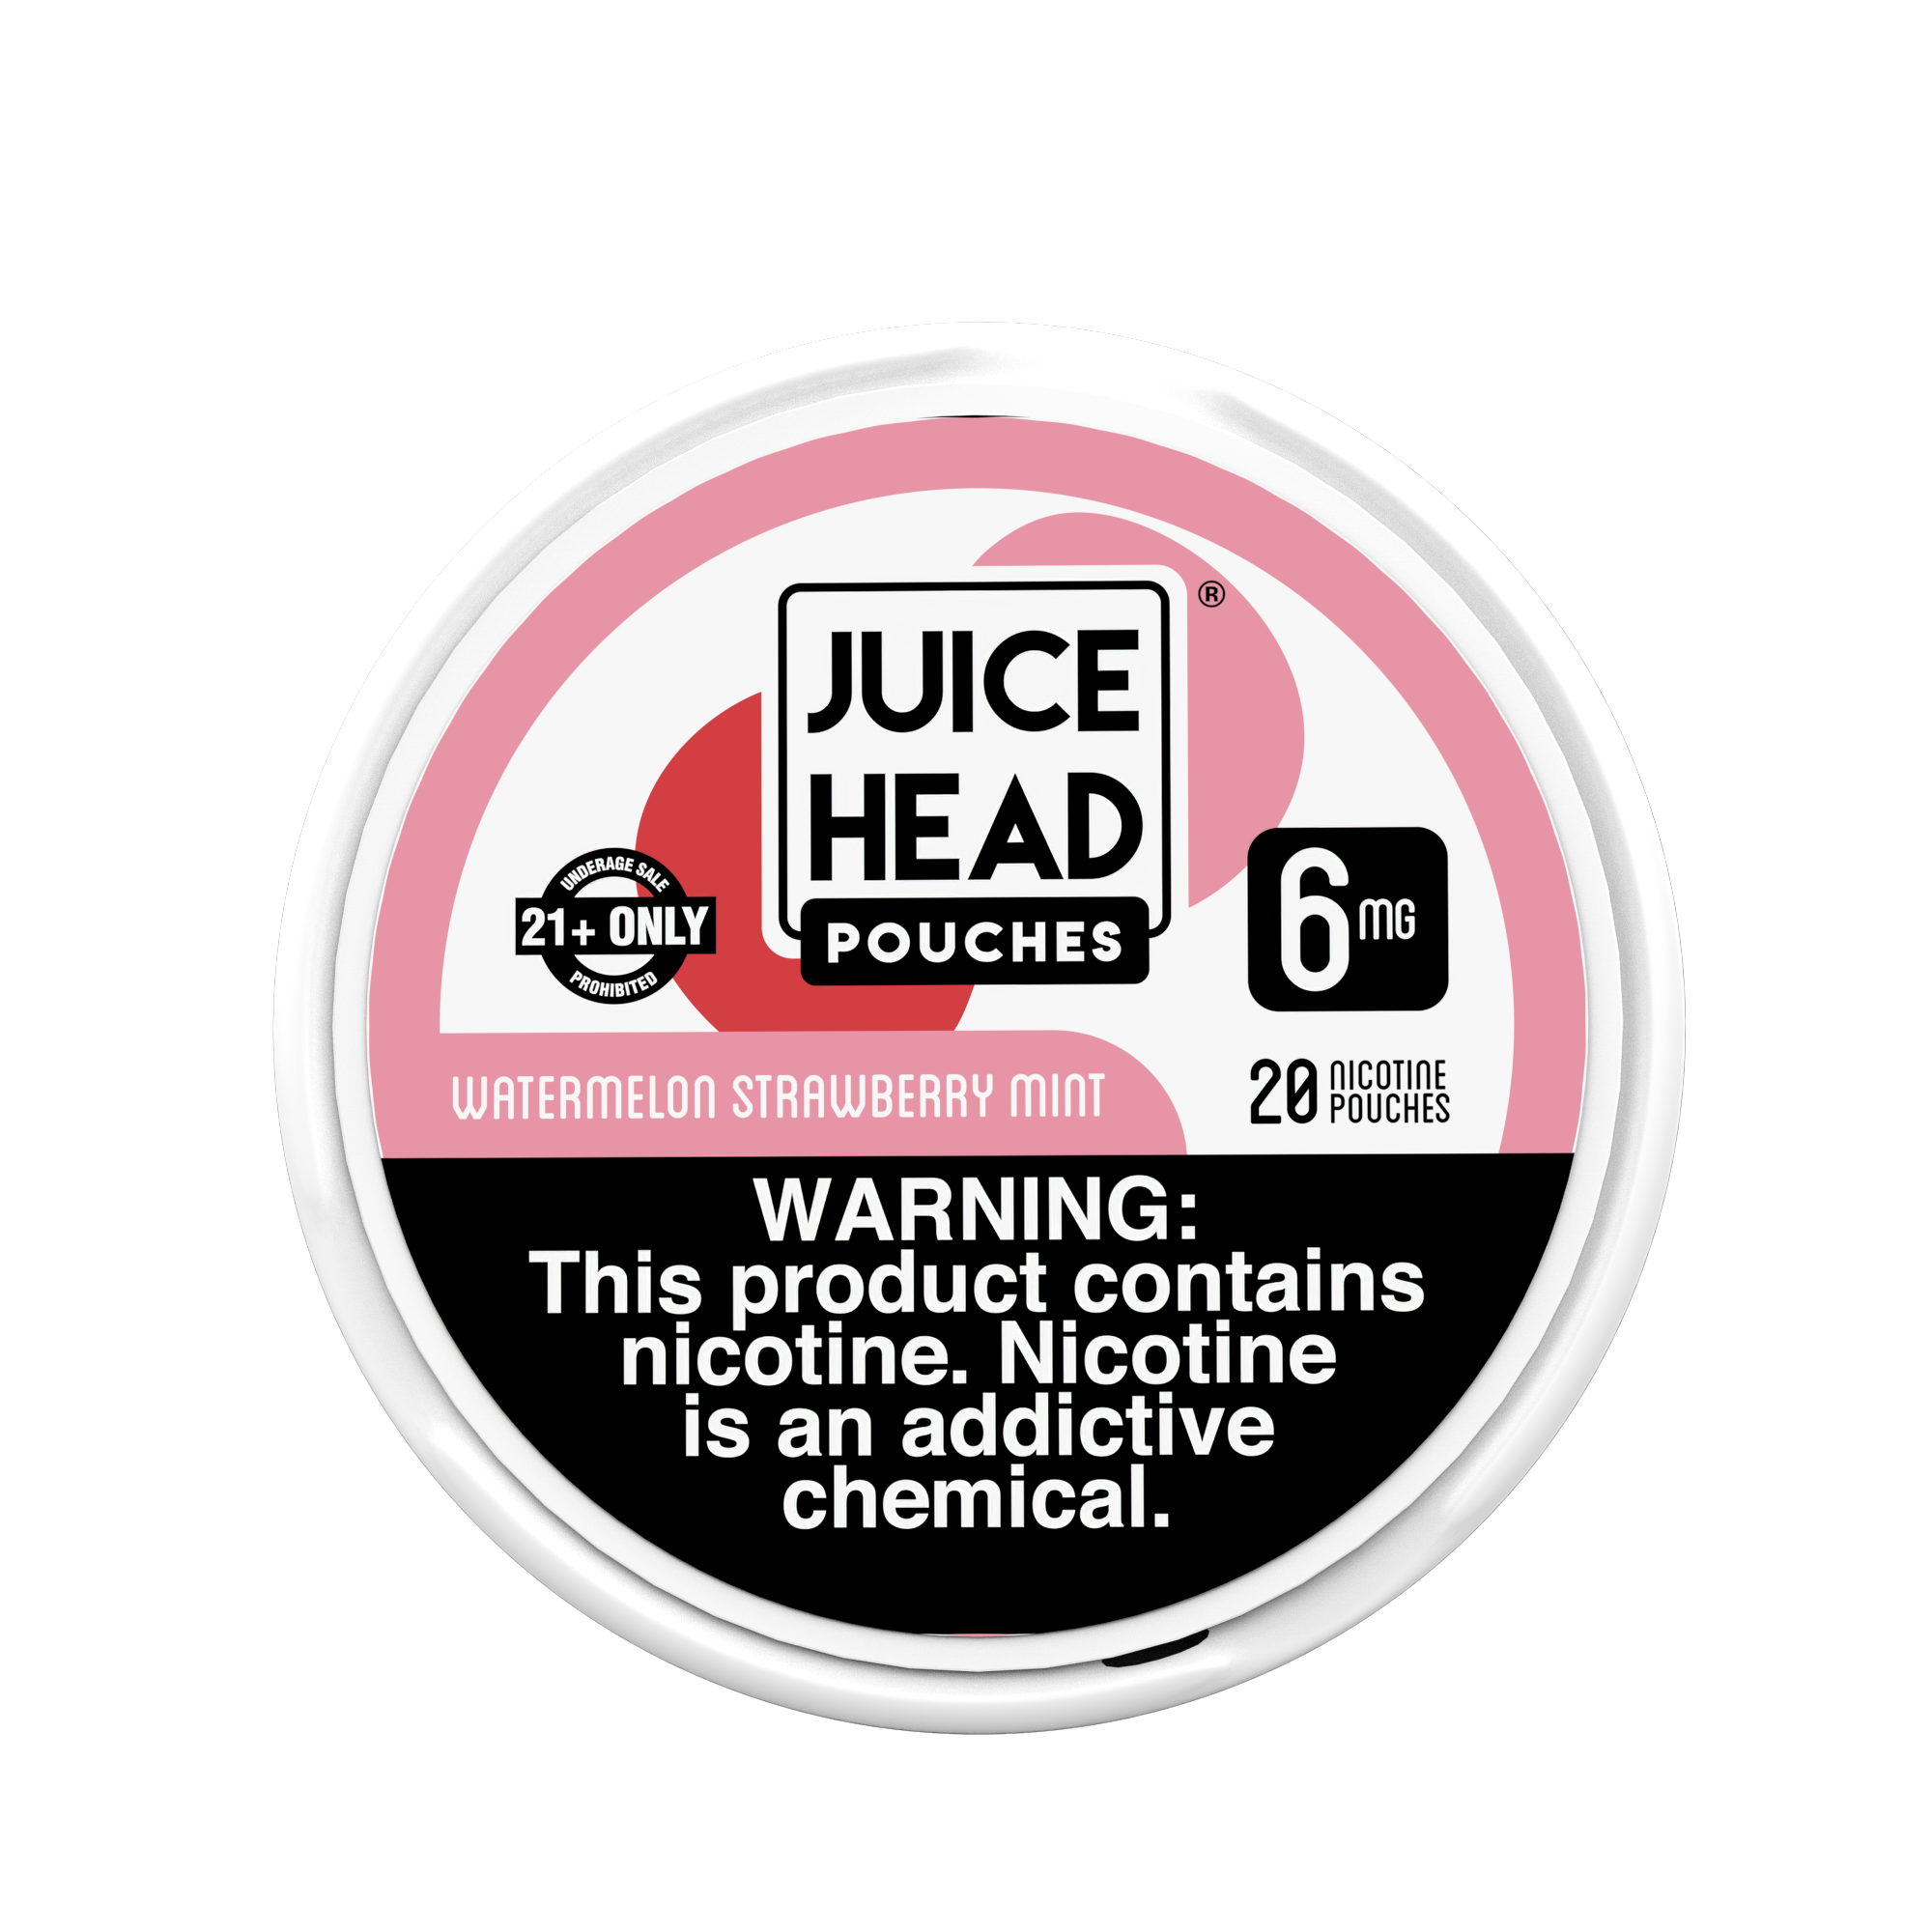 JUICE HEAD POUCHES - Watermelon Strawberry Mint